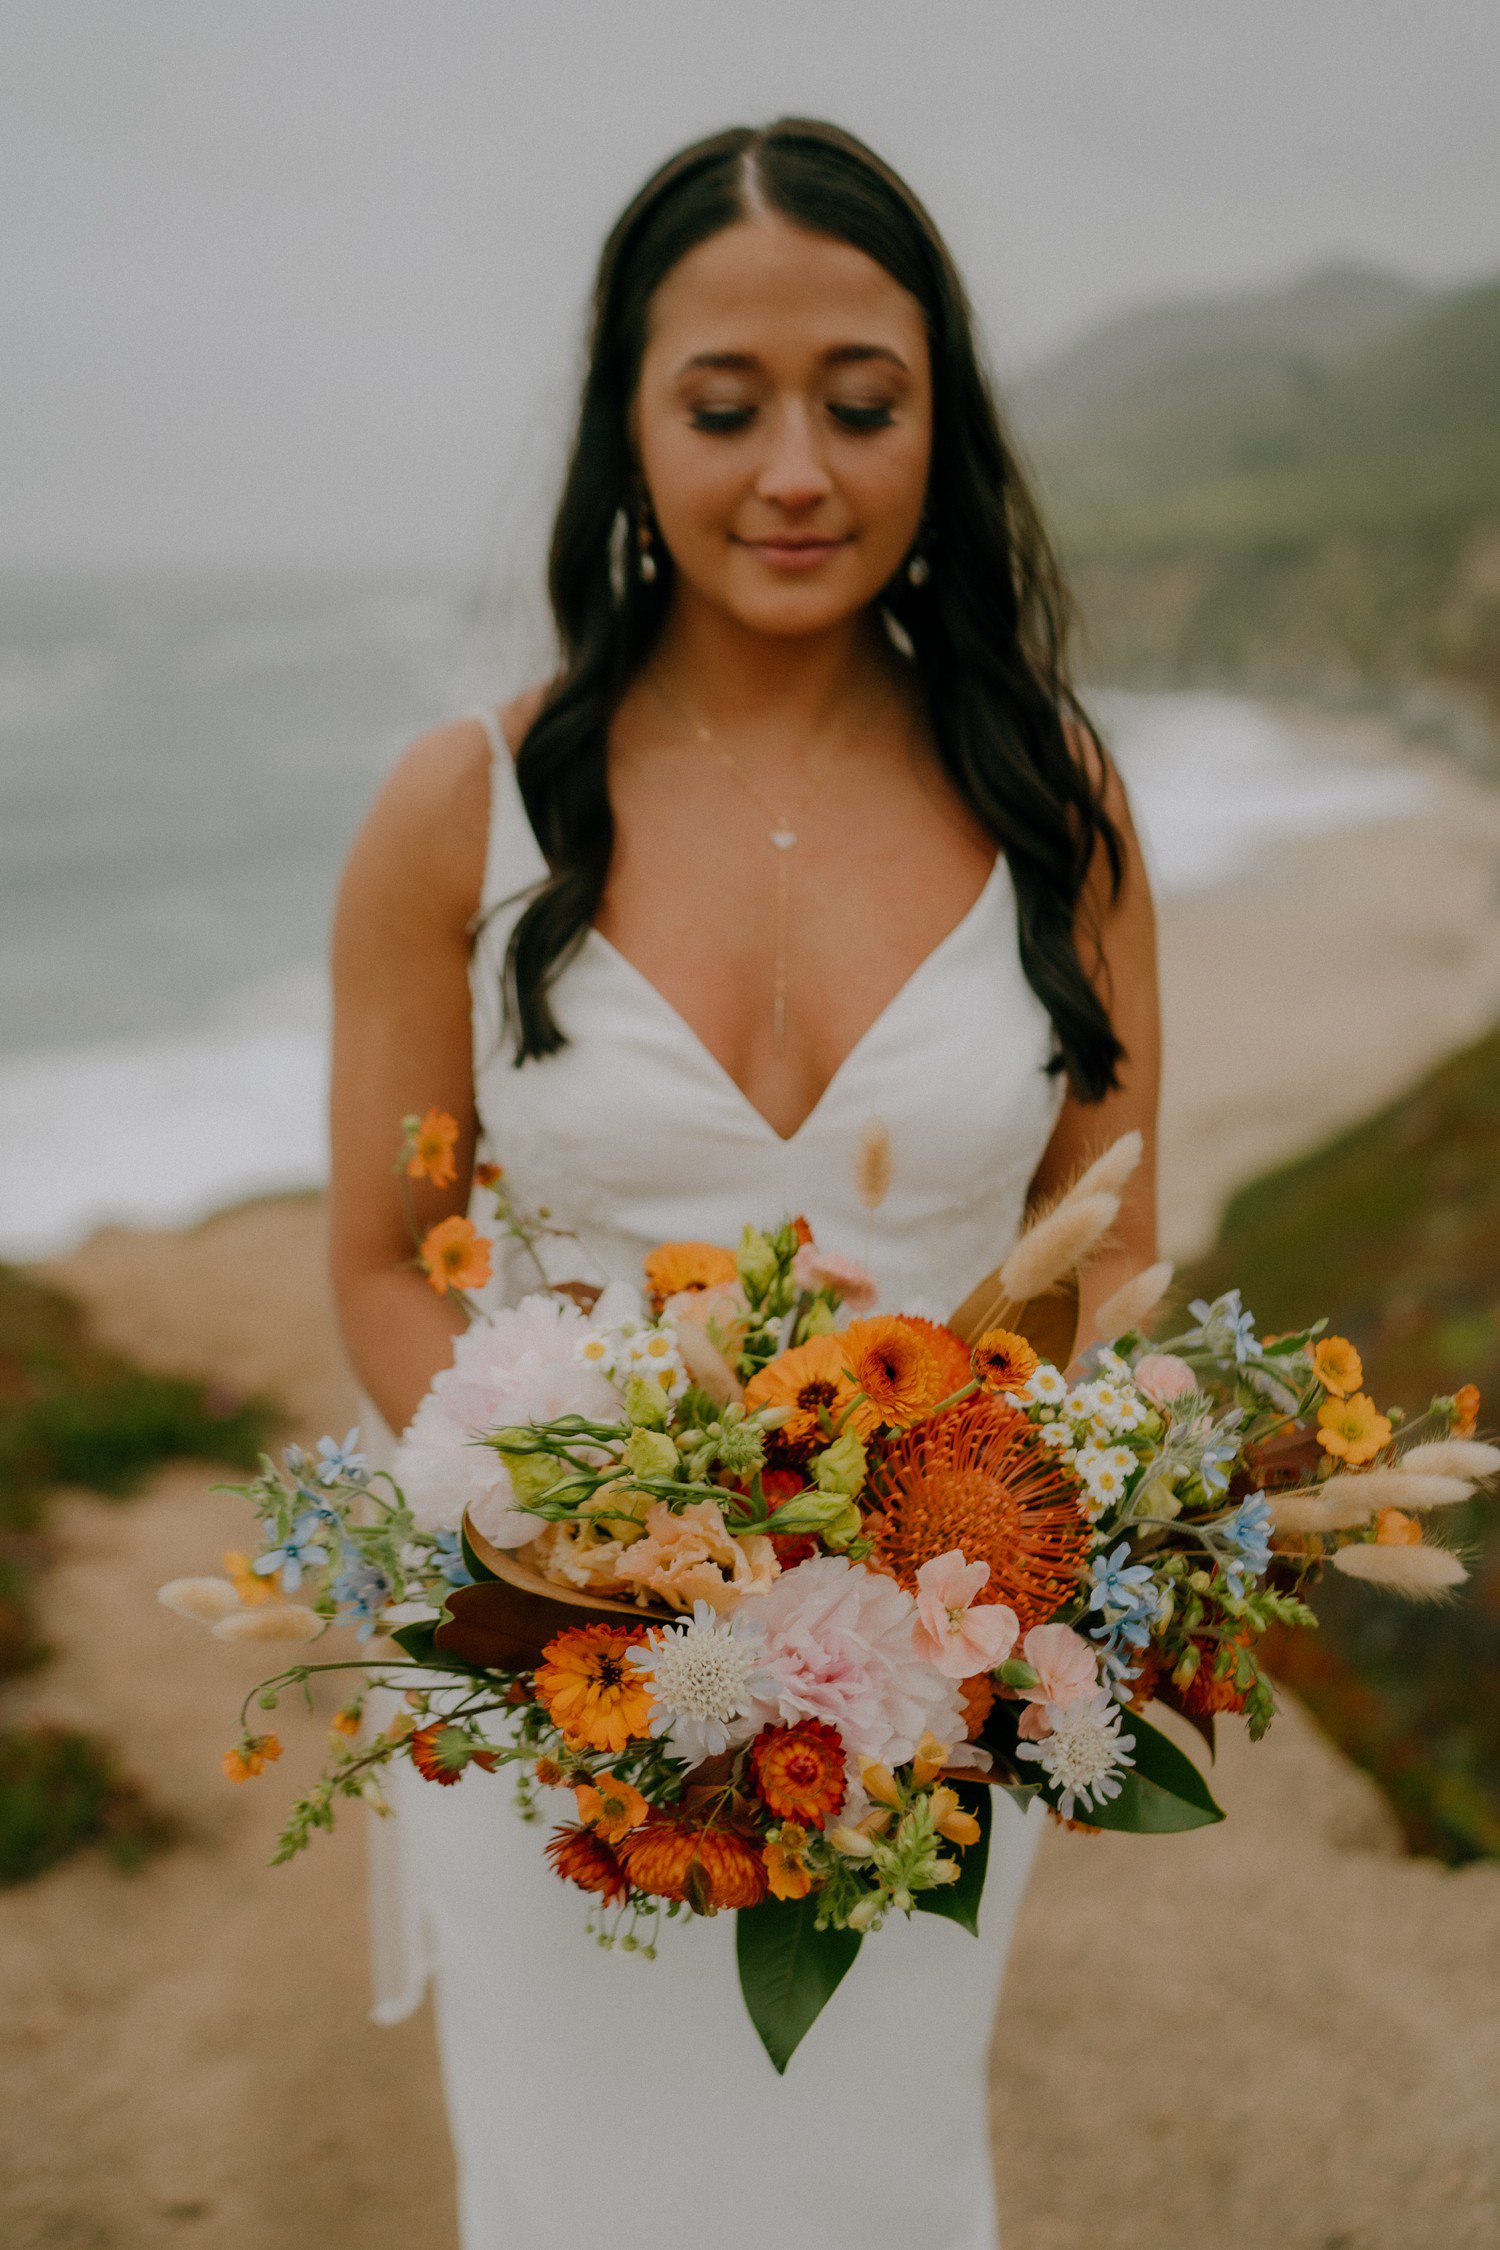 Bridal photos photos at Big Sur with colorful bouquet. 